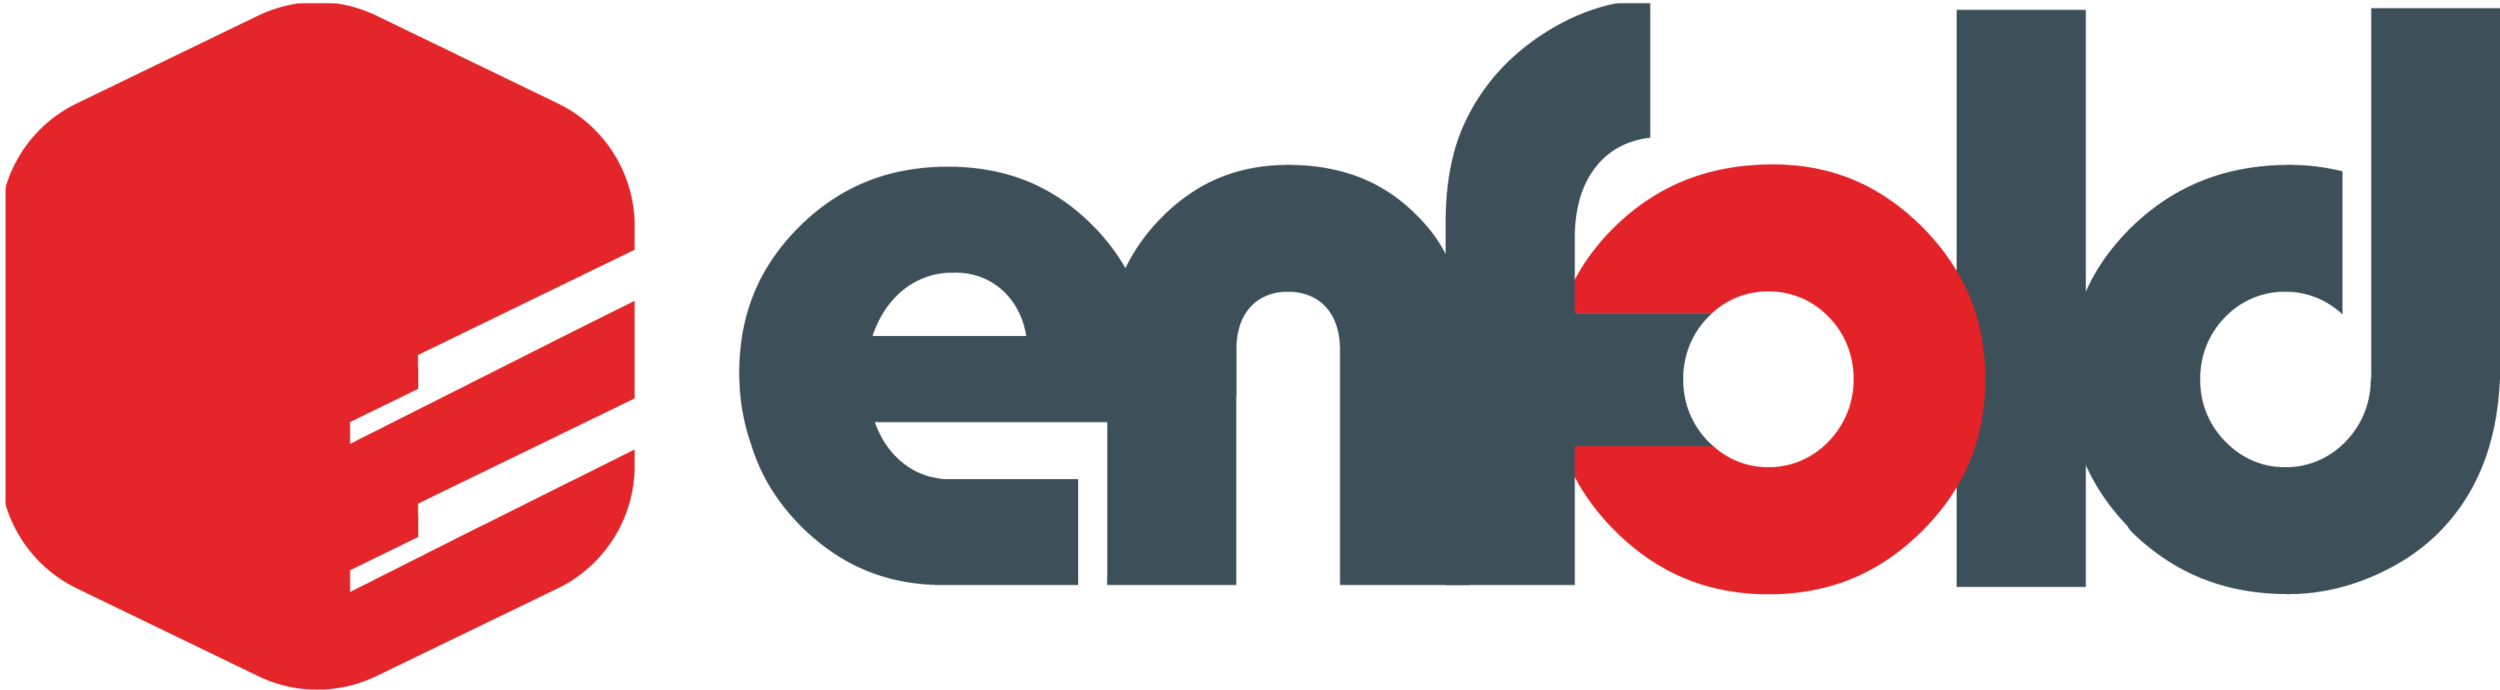 Enfold logo1.png